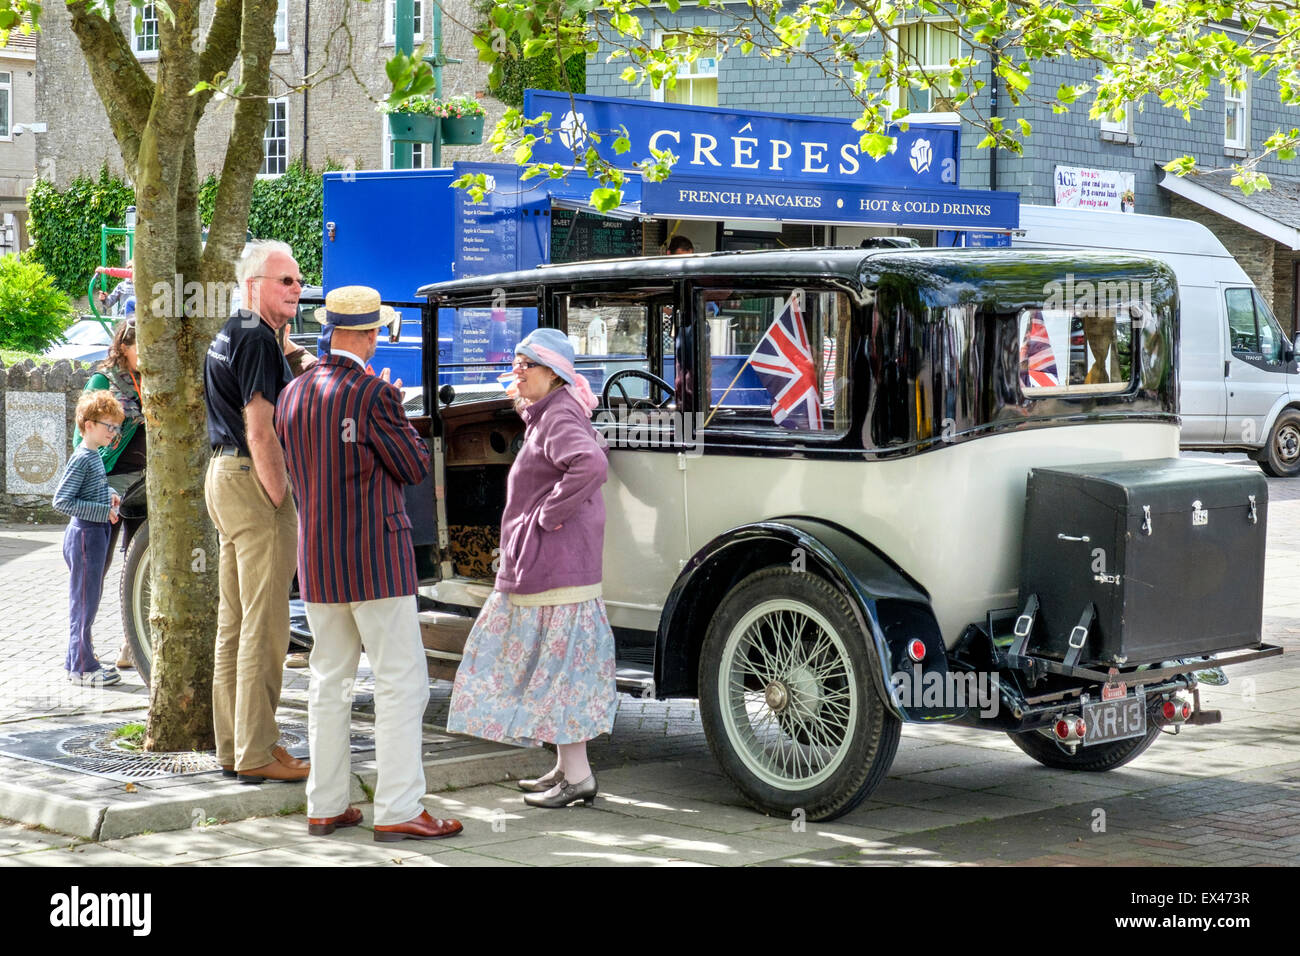 Vintage Sunbeam car at Kingsbridge classic car show in 2015 Stock Photo